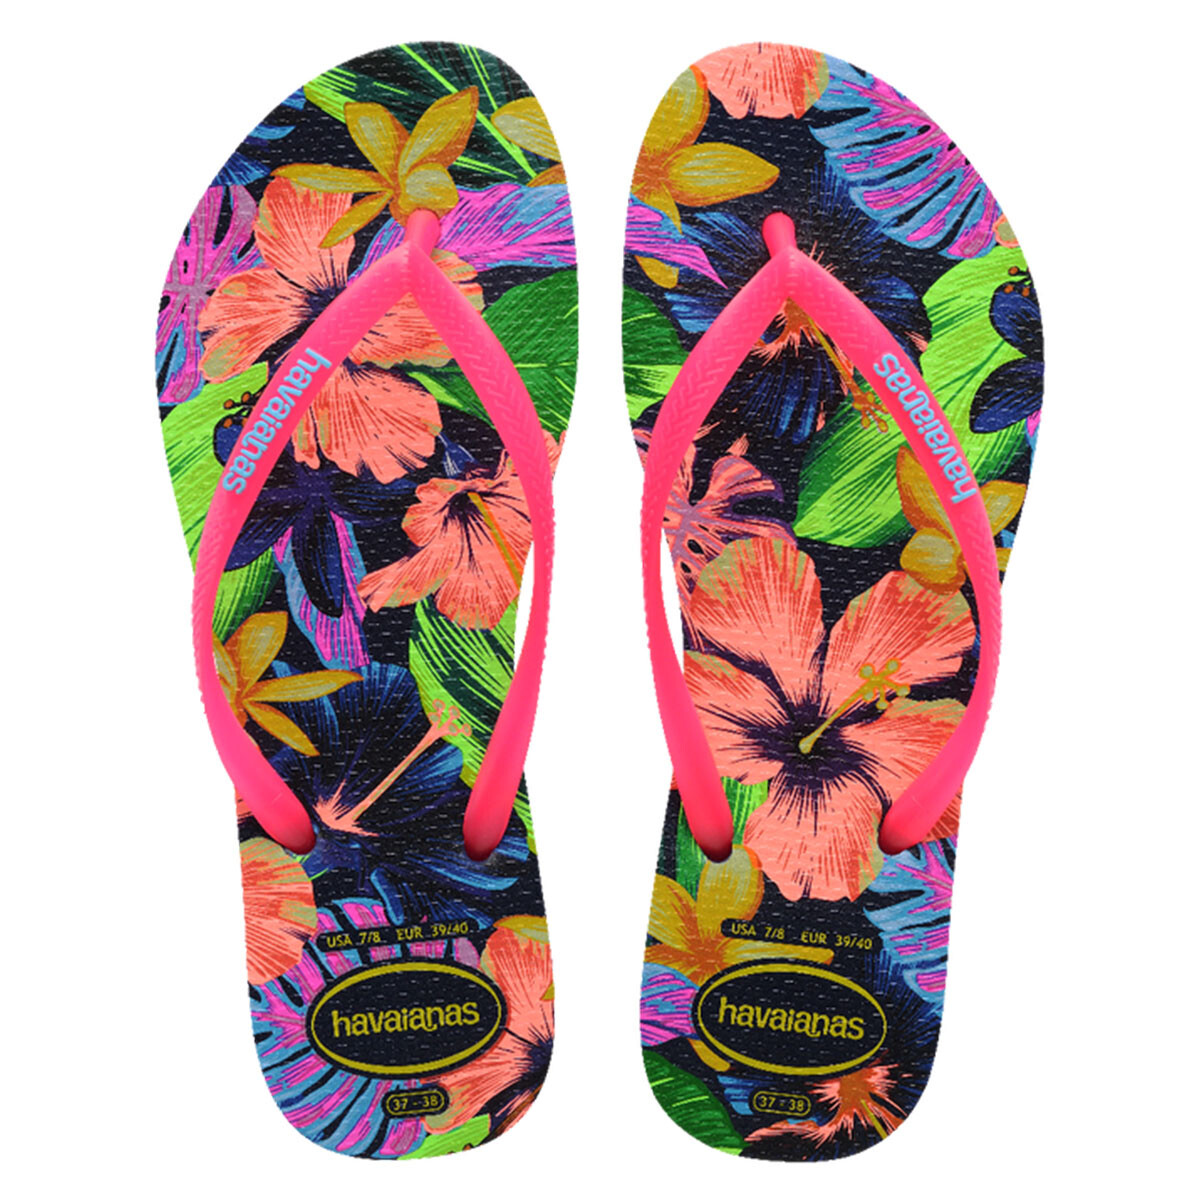 Havaianas Calzado Chancleta Ojota Sandalia Playa - Floral 